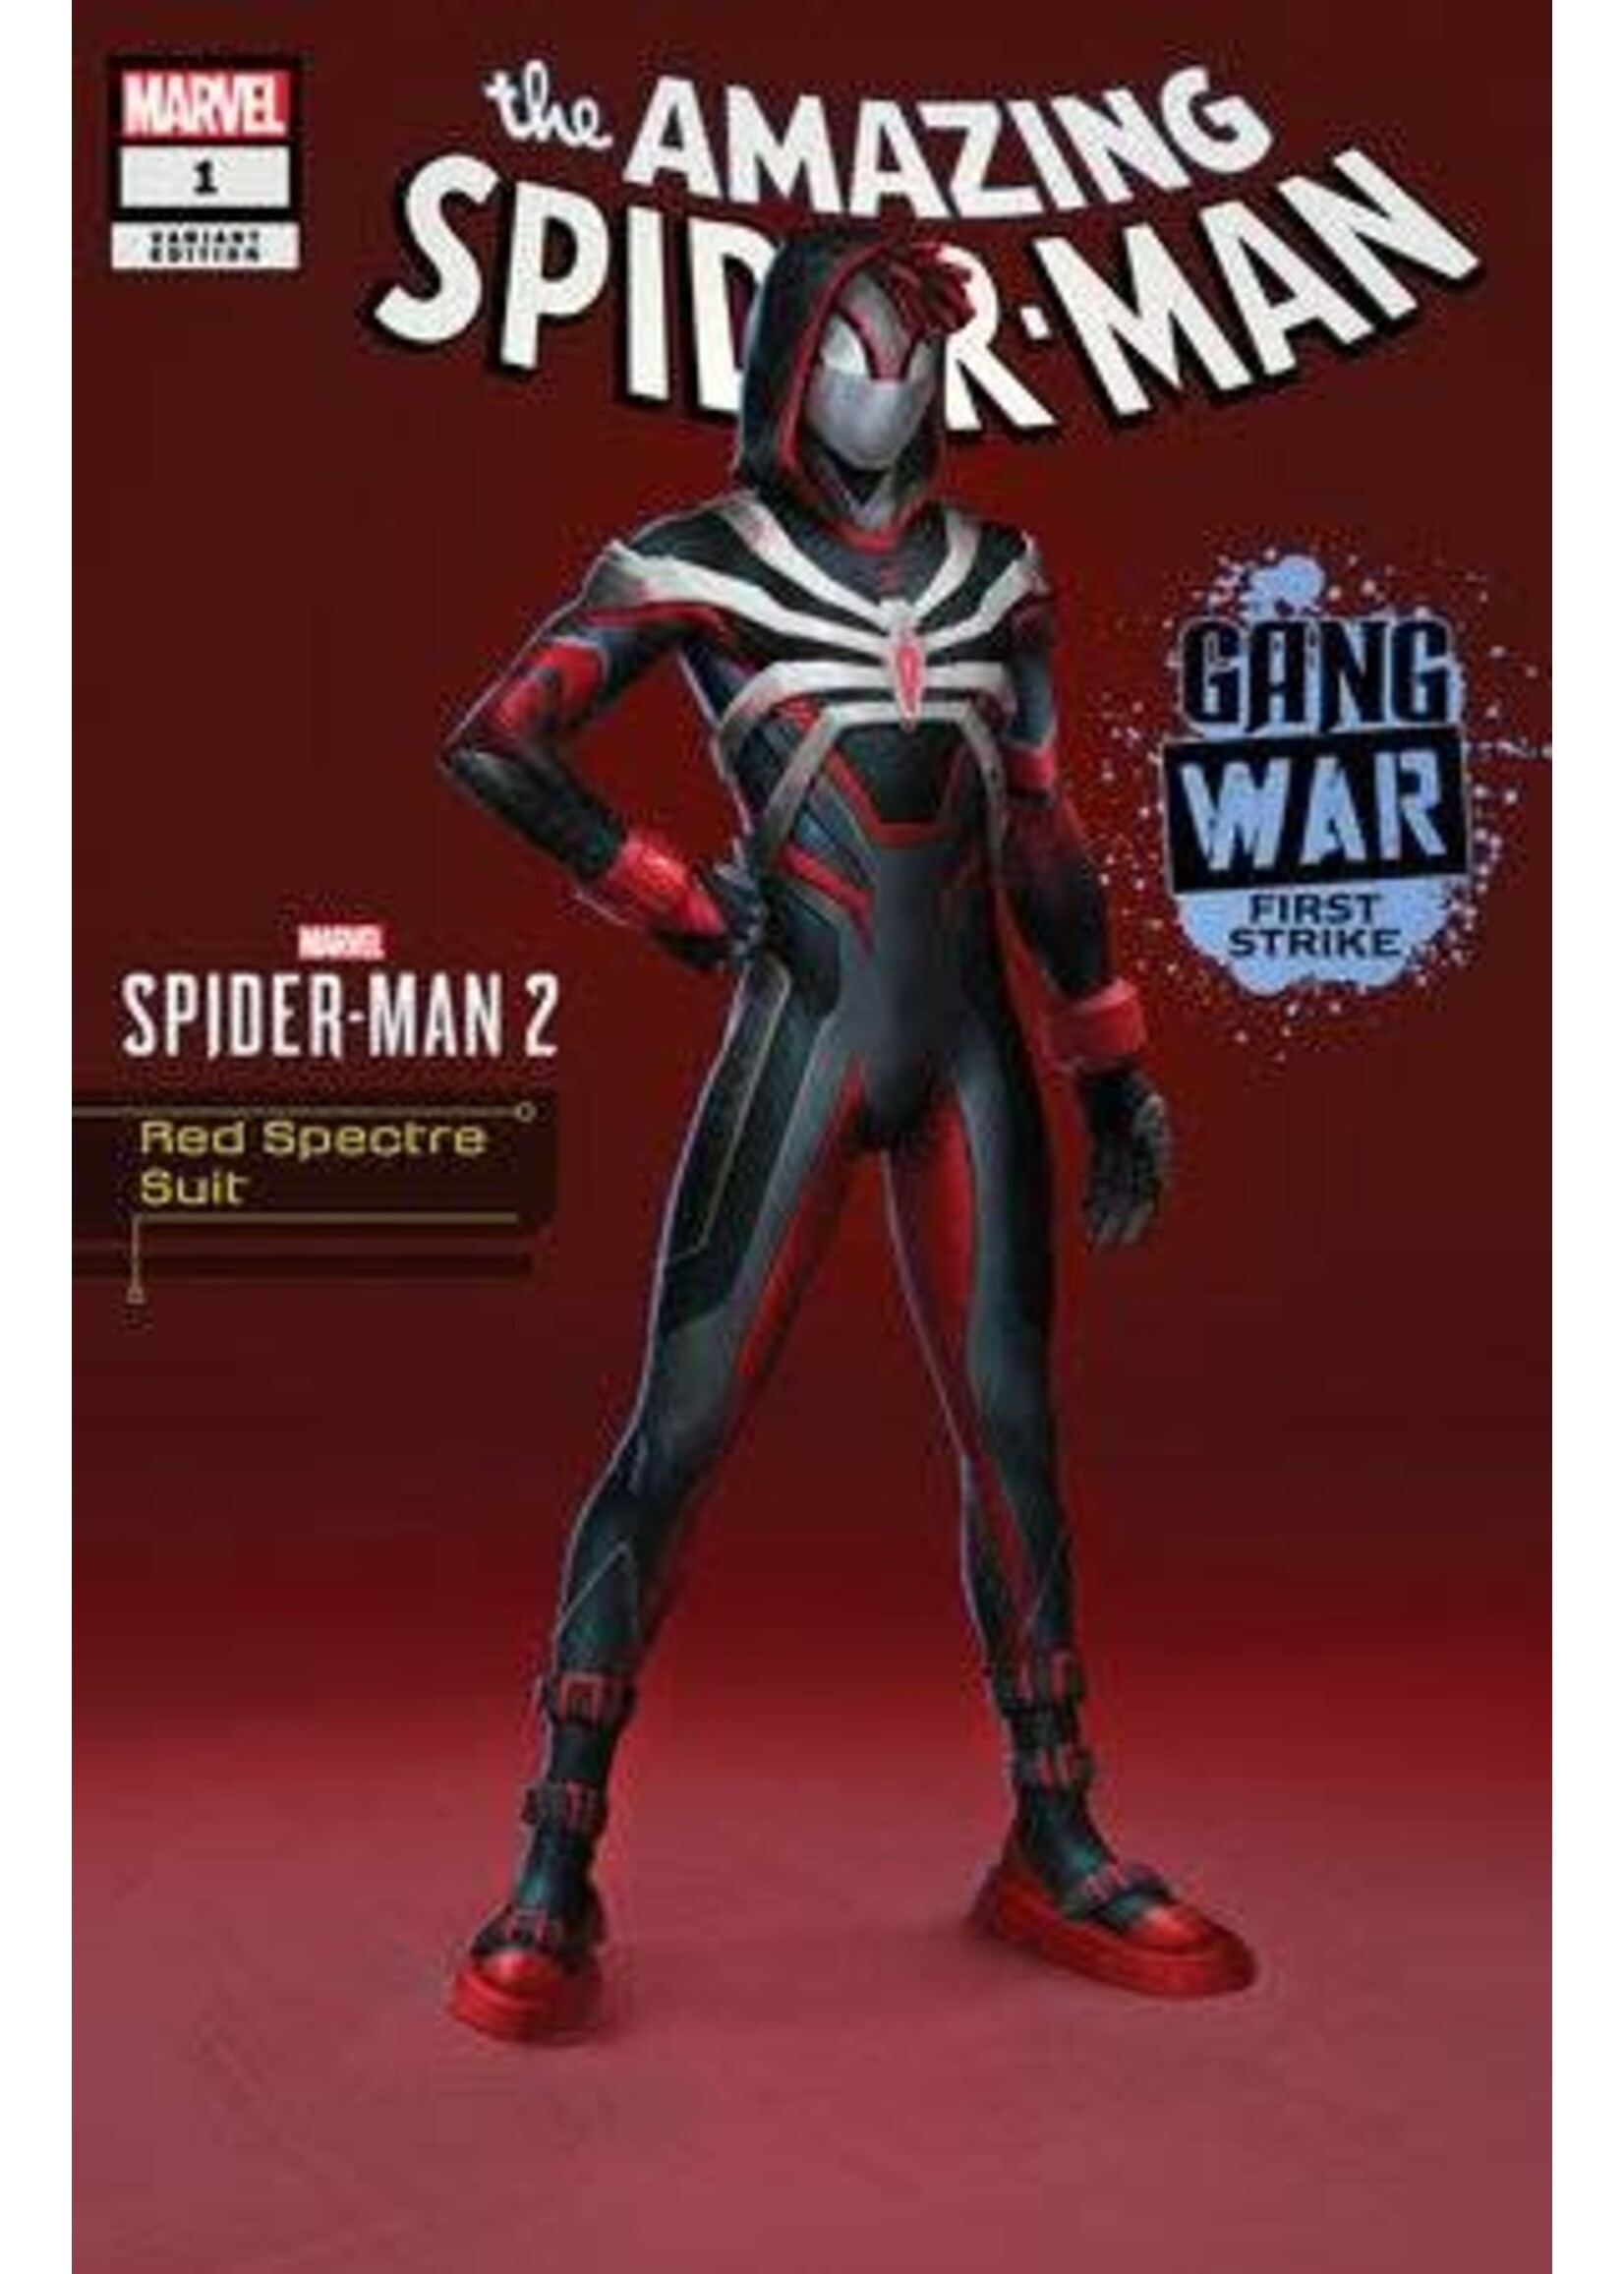 MARVEL COMICS AMAZING SPIDER-MAN GANG WAR FIRST STRIKE #1 RED SPECTRE SUIT SPIDER-MAN 2 VAR